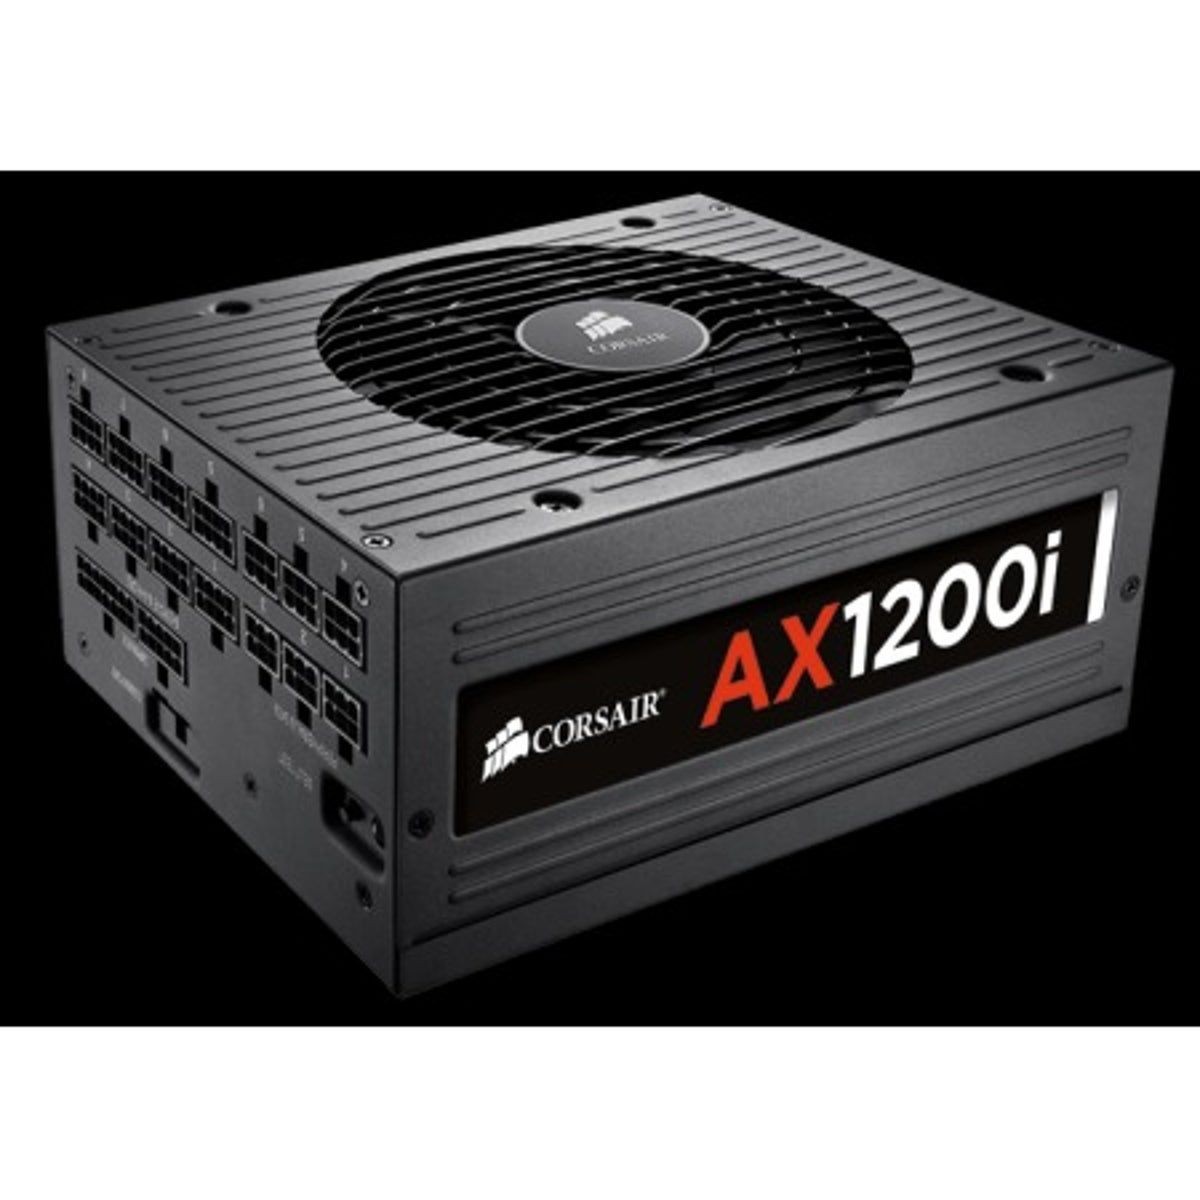 Corsair AX1200i Digital ATX Power Supply Price in BD